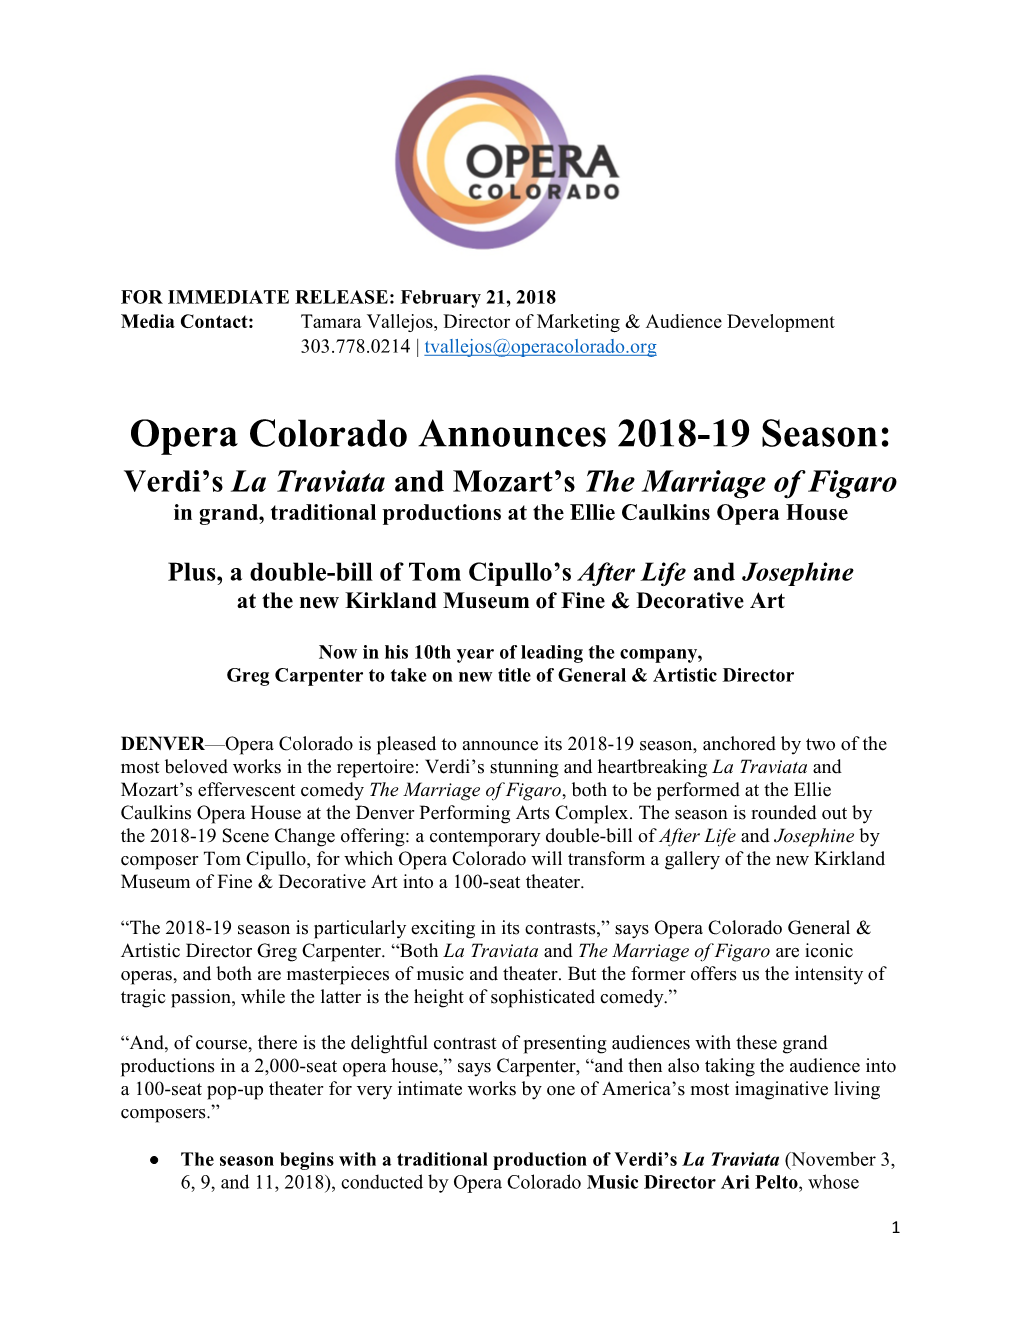 Opera Colorado Announces 2018-19 Season: Verdi’S La Traviata and Mozart’S the Marriage of Figaro in Grand, Traditional Productions at the Ellie Caulkins Opera House